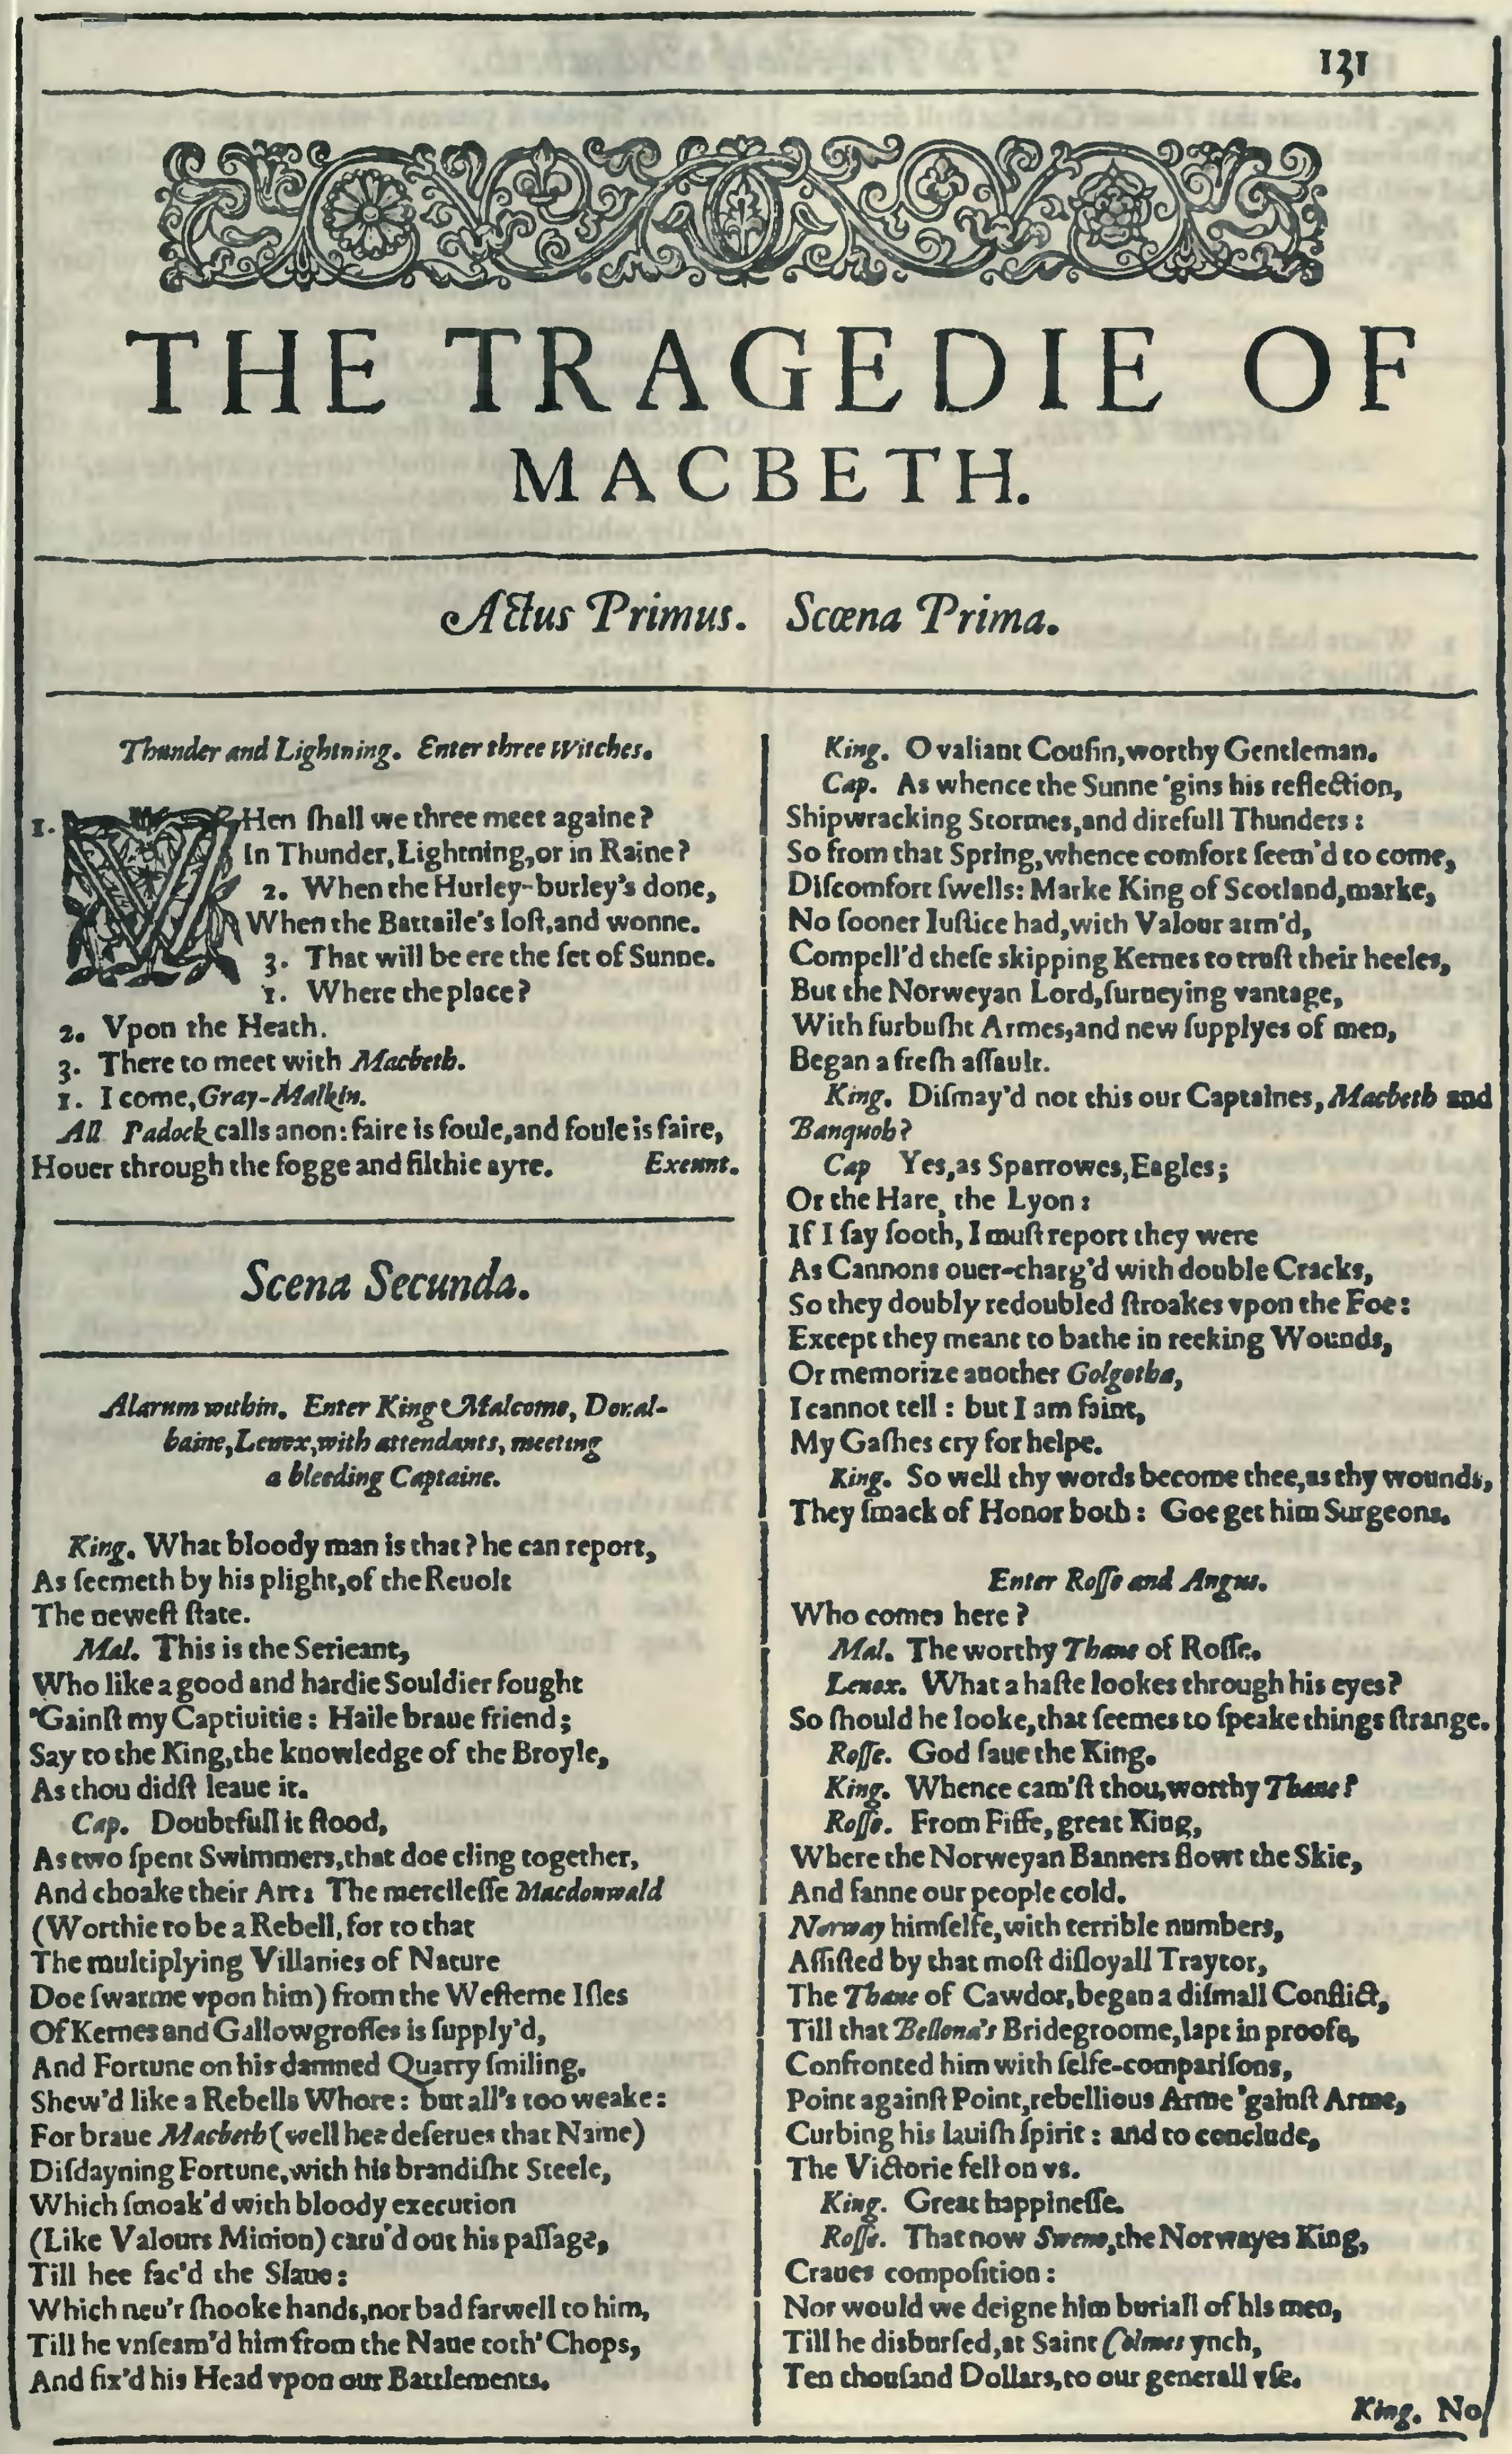 Первая страница Макбет Шекспира из Первого Фолио, 1623, The first page of Shakespeare's Macbeth from the First Folio